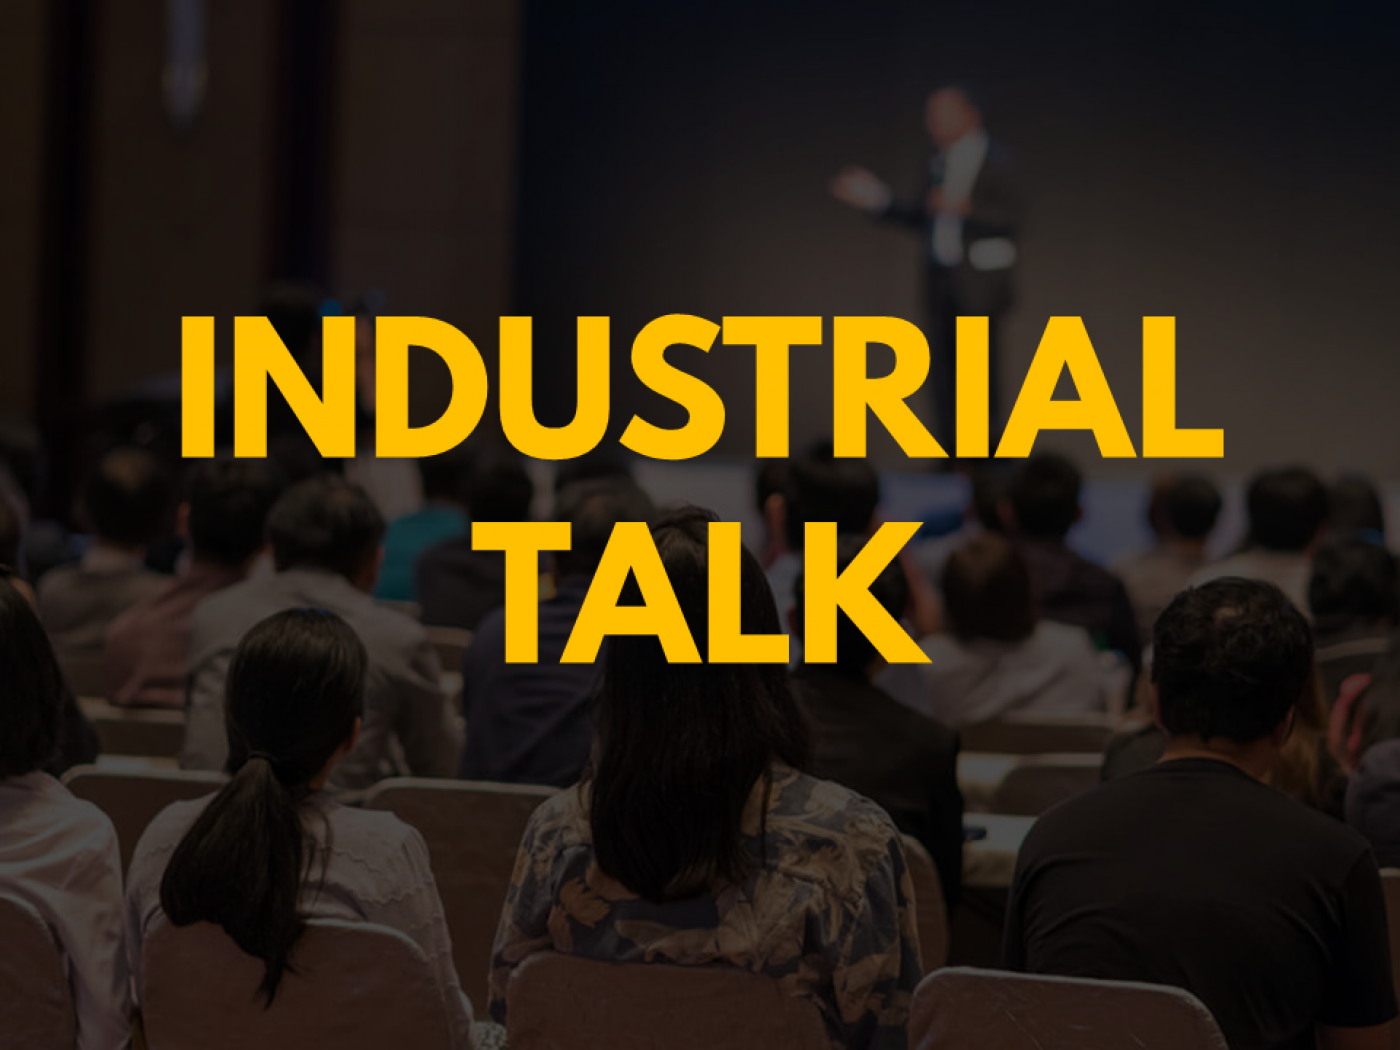 Industrial Talk "Digital Era: The New Way of Working"